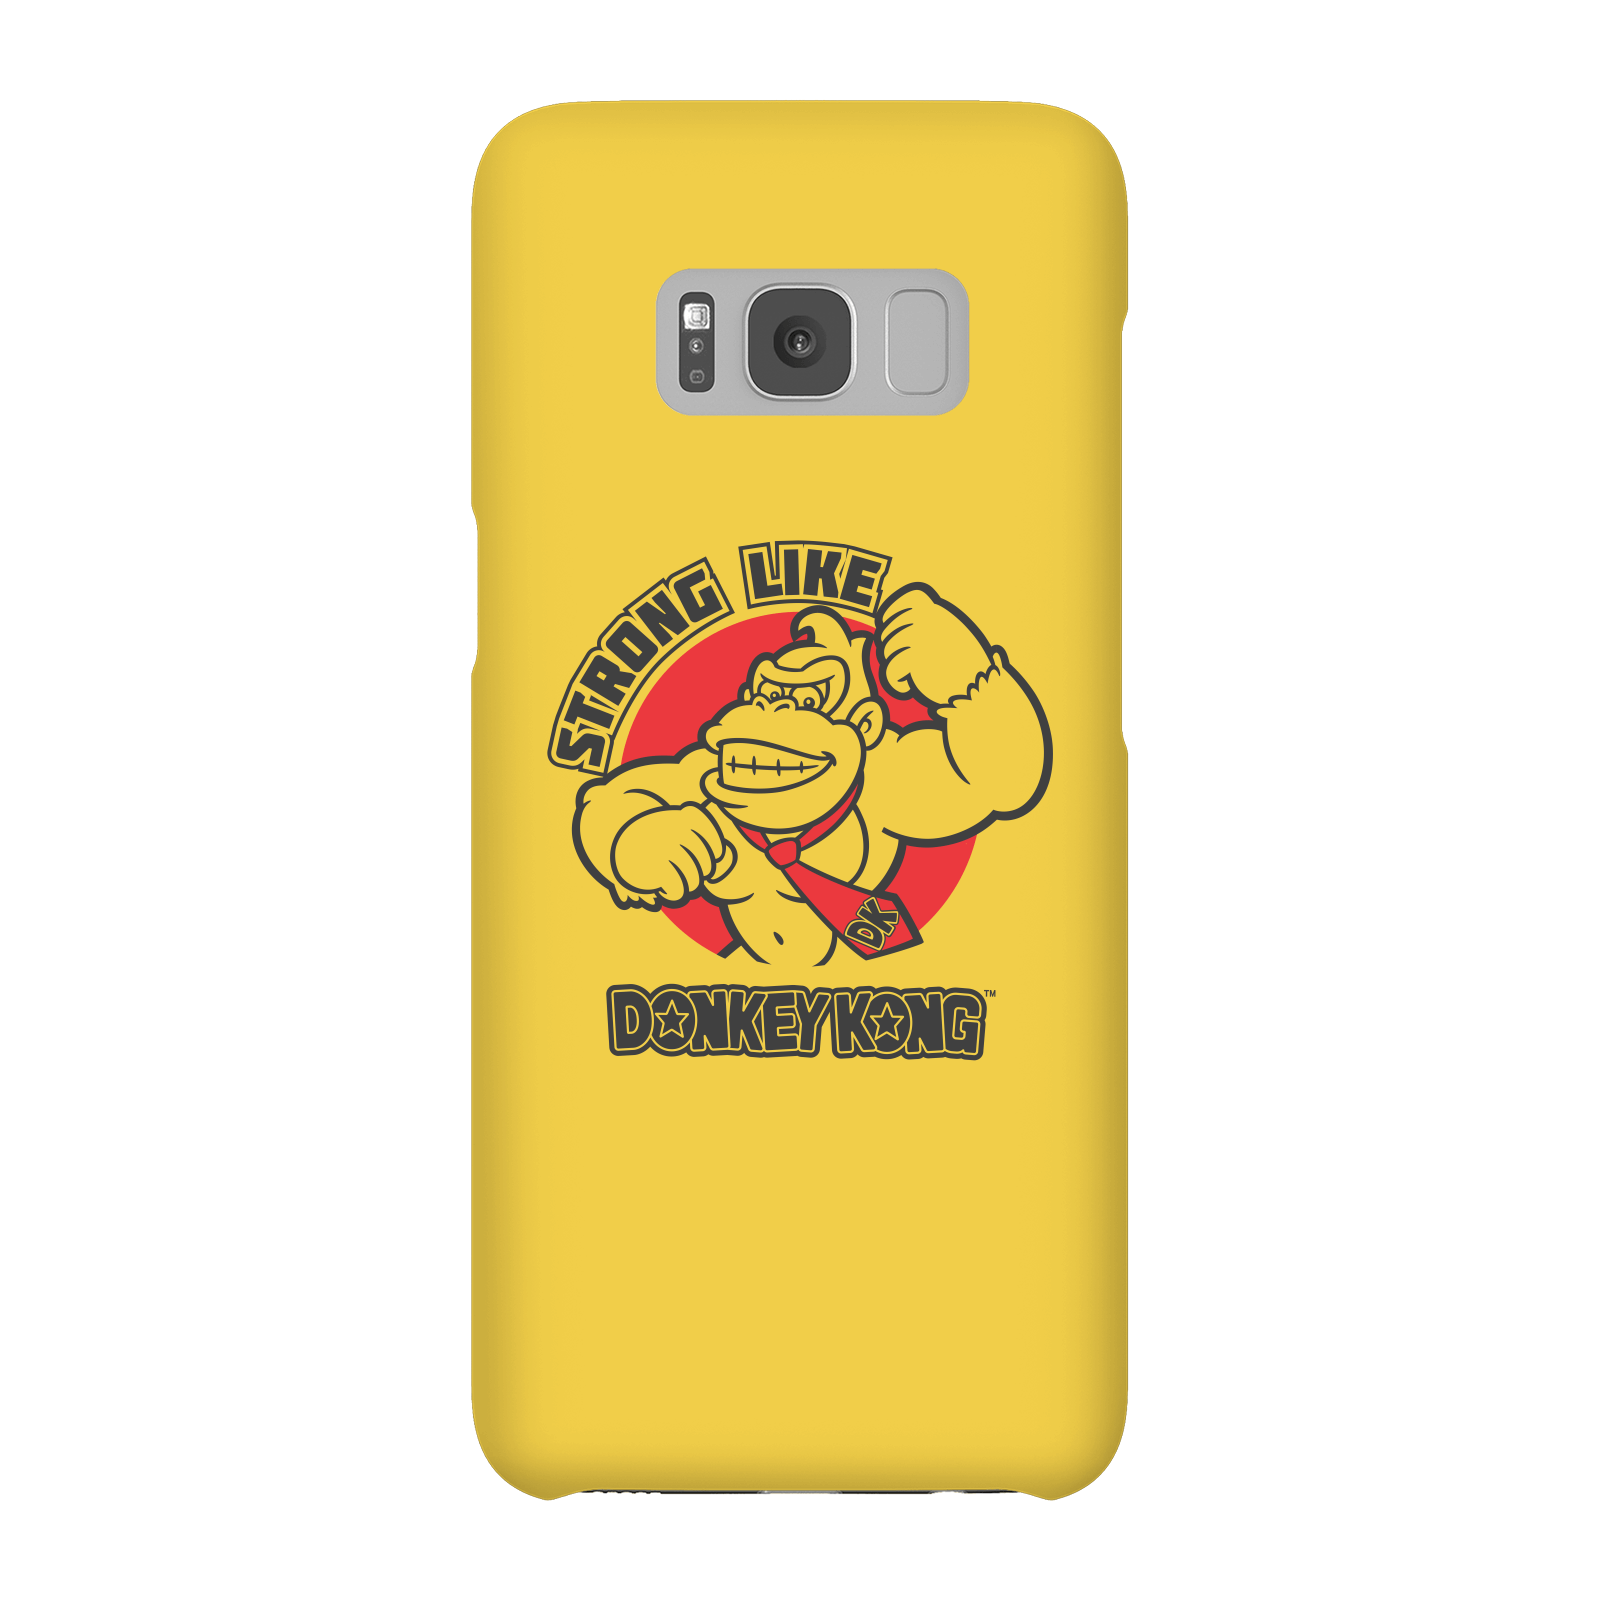 Nintendo Donkey Kong Strong Like Donkey Kong Phone Case - Samsung S8 - Snap Case - Gloss